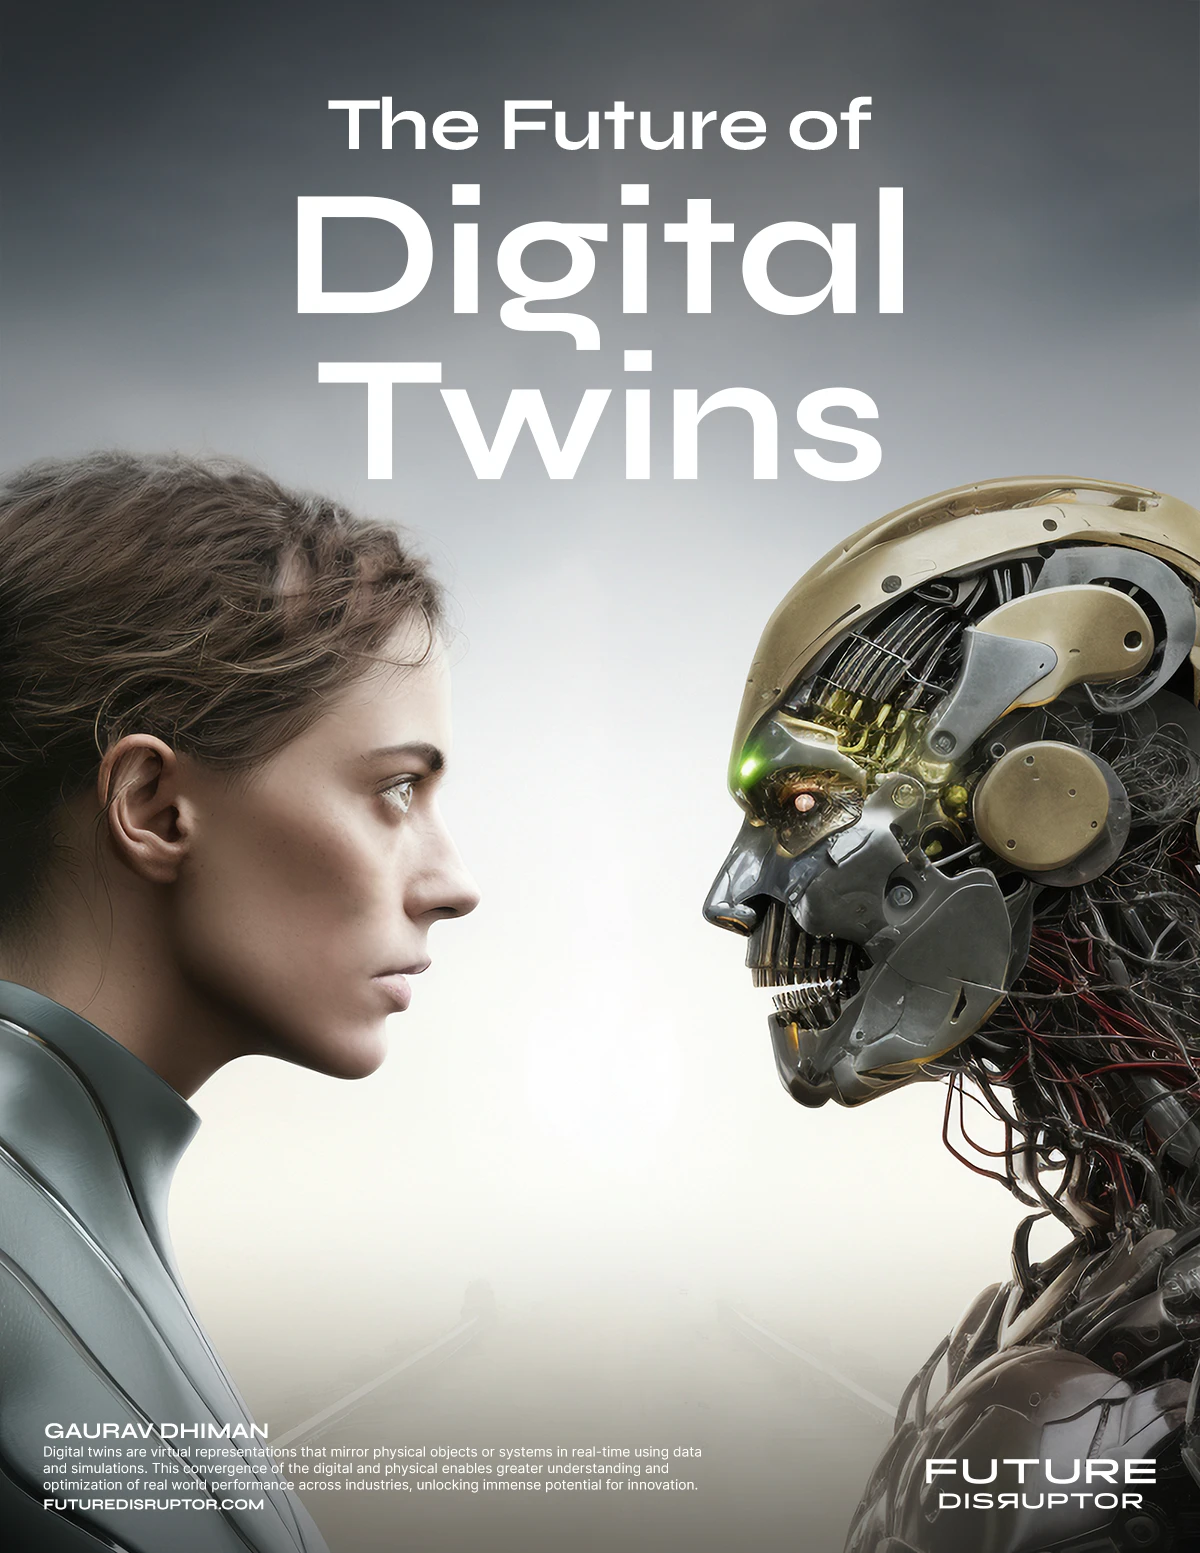 The Future of Digital Twins